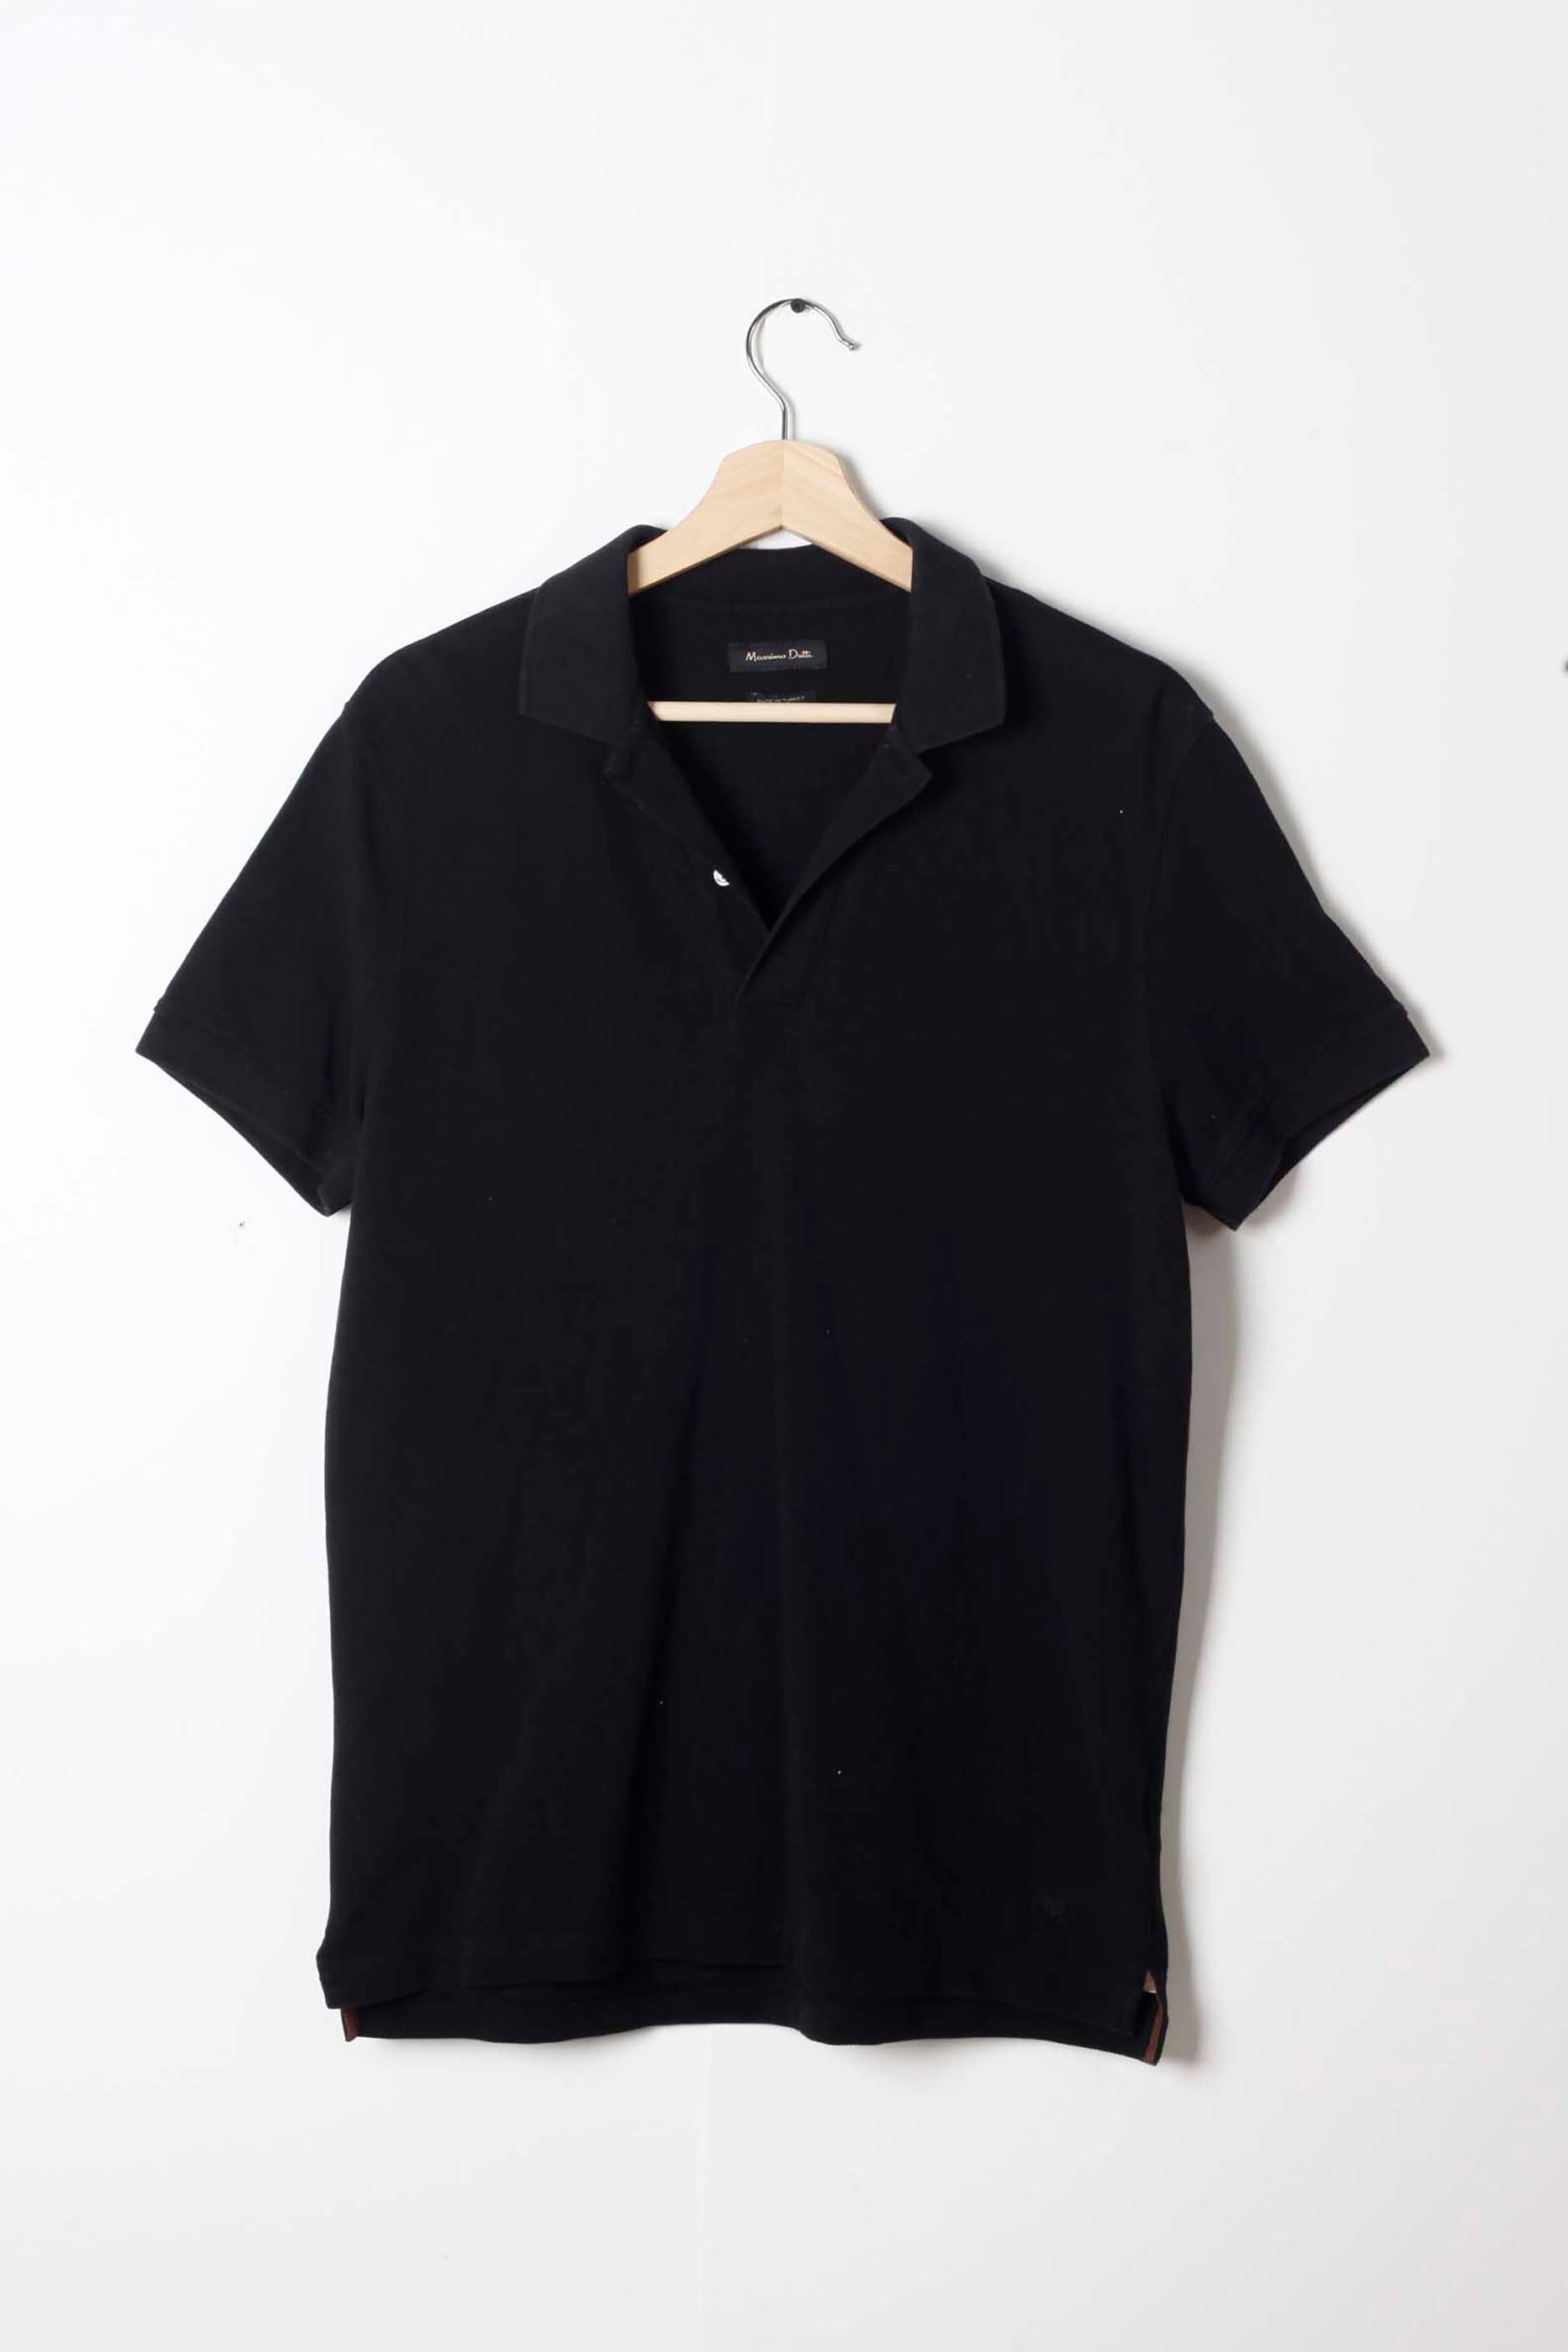 Mens Massimo Dutti Black Polo Shirt (Medium)